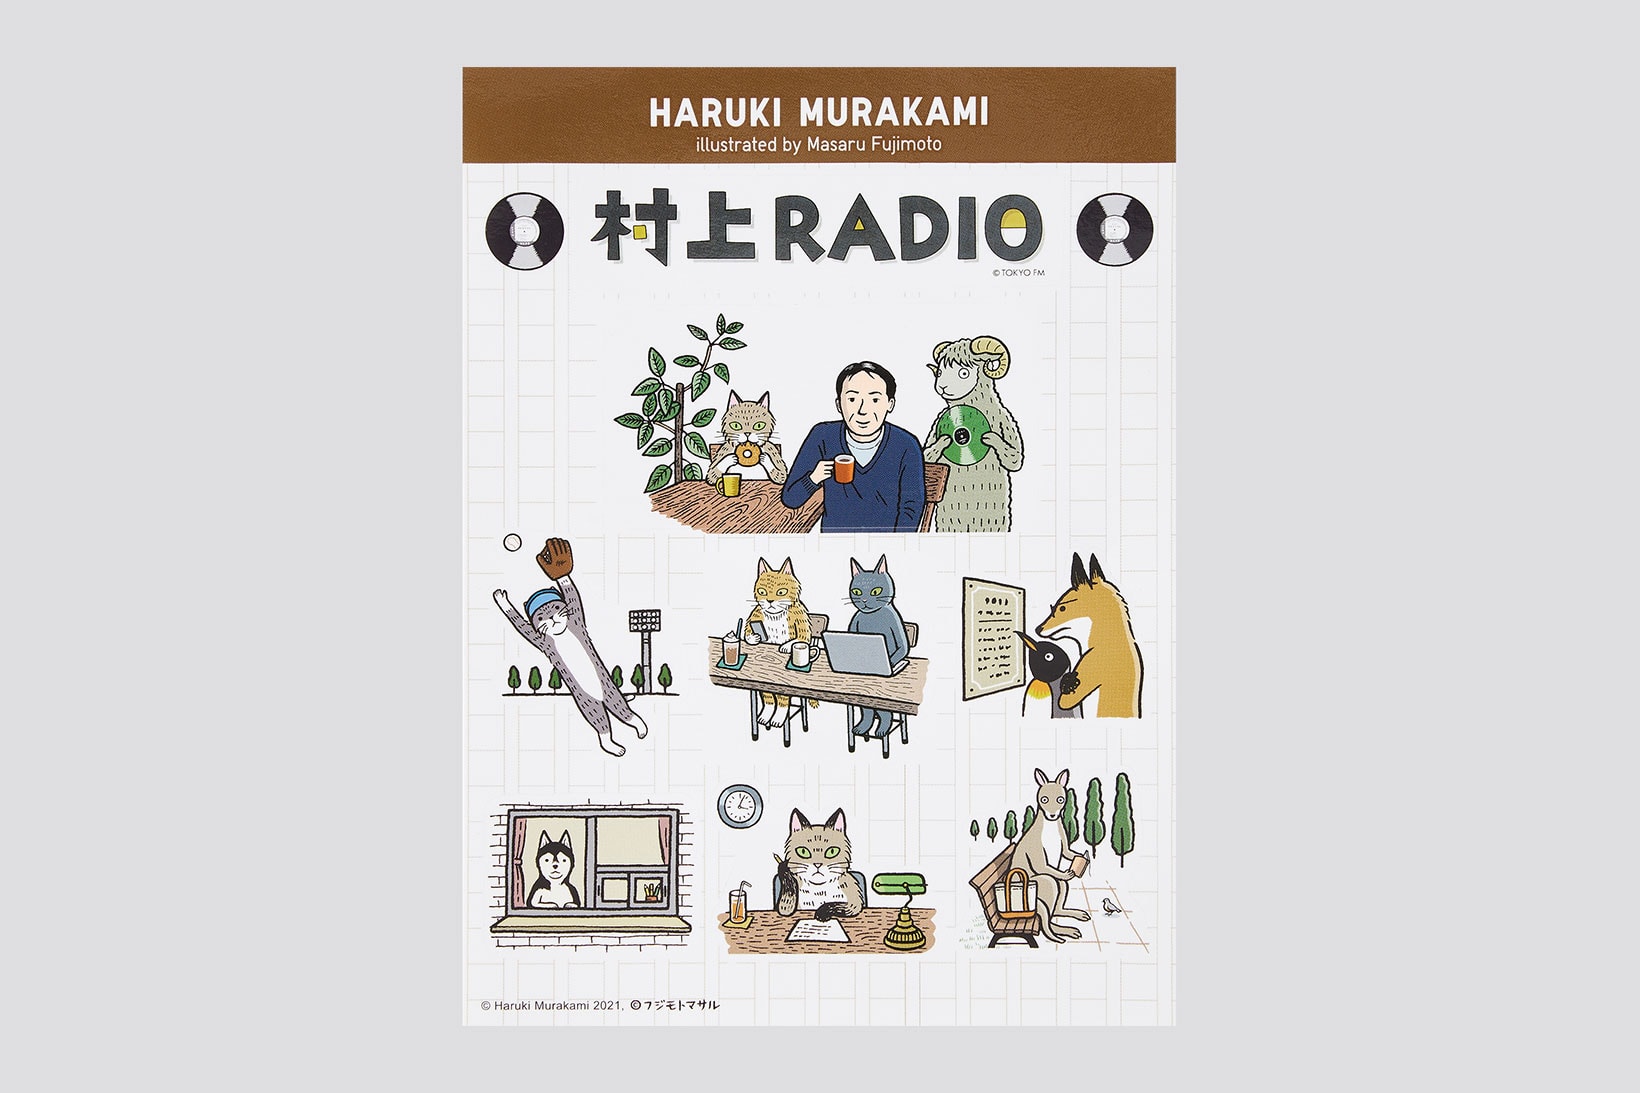 uniqlo ut haruki murakami author books collaboration sticker illustration